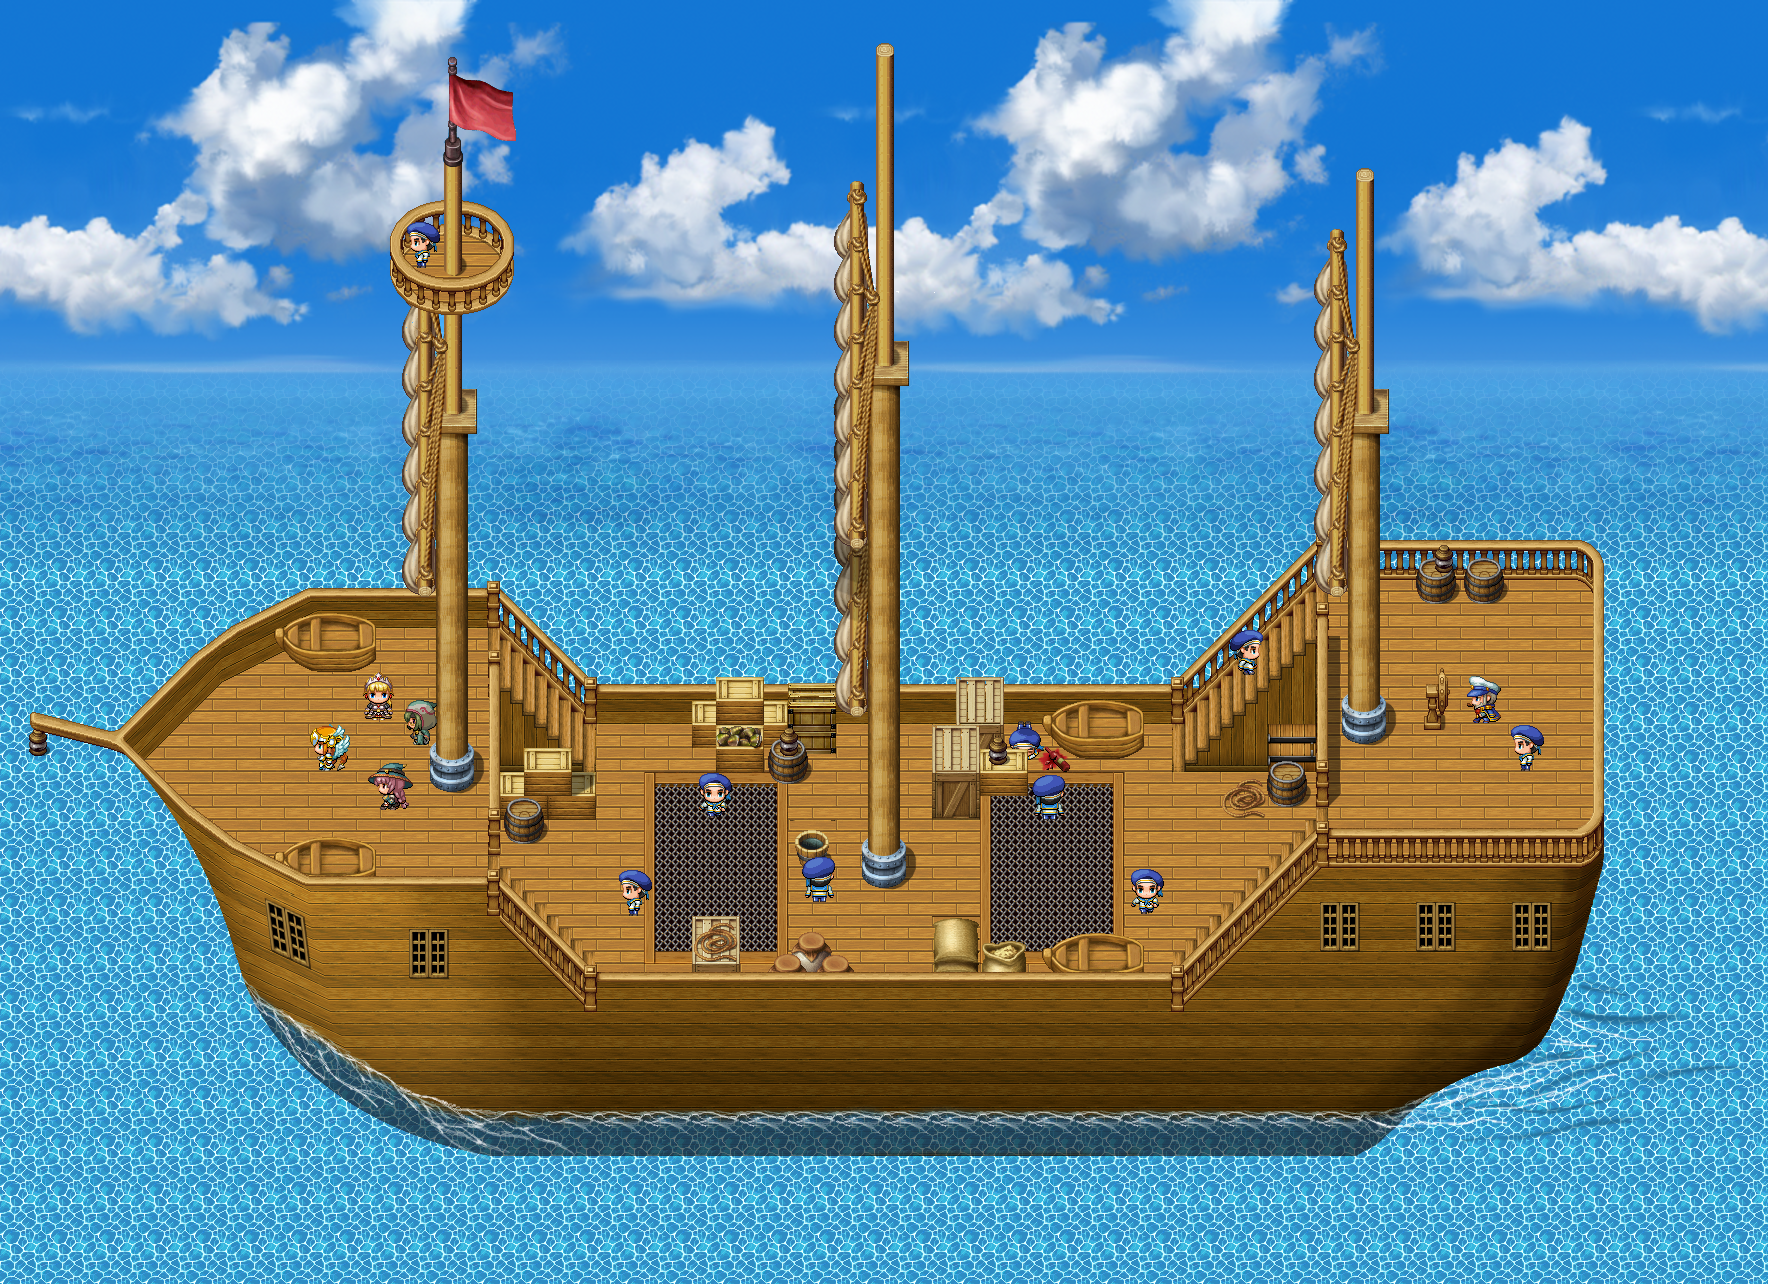 RPG maker тайлсеты корабль. RPG maker MV корабль. Тайлсеты корабля для RPG maker MV. Пиксельный корабль.